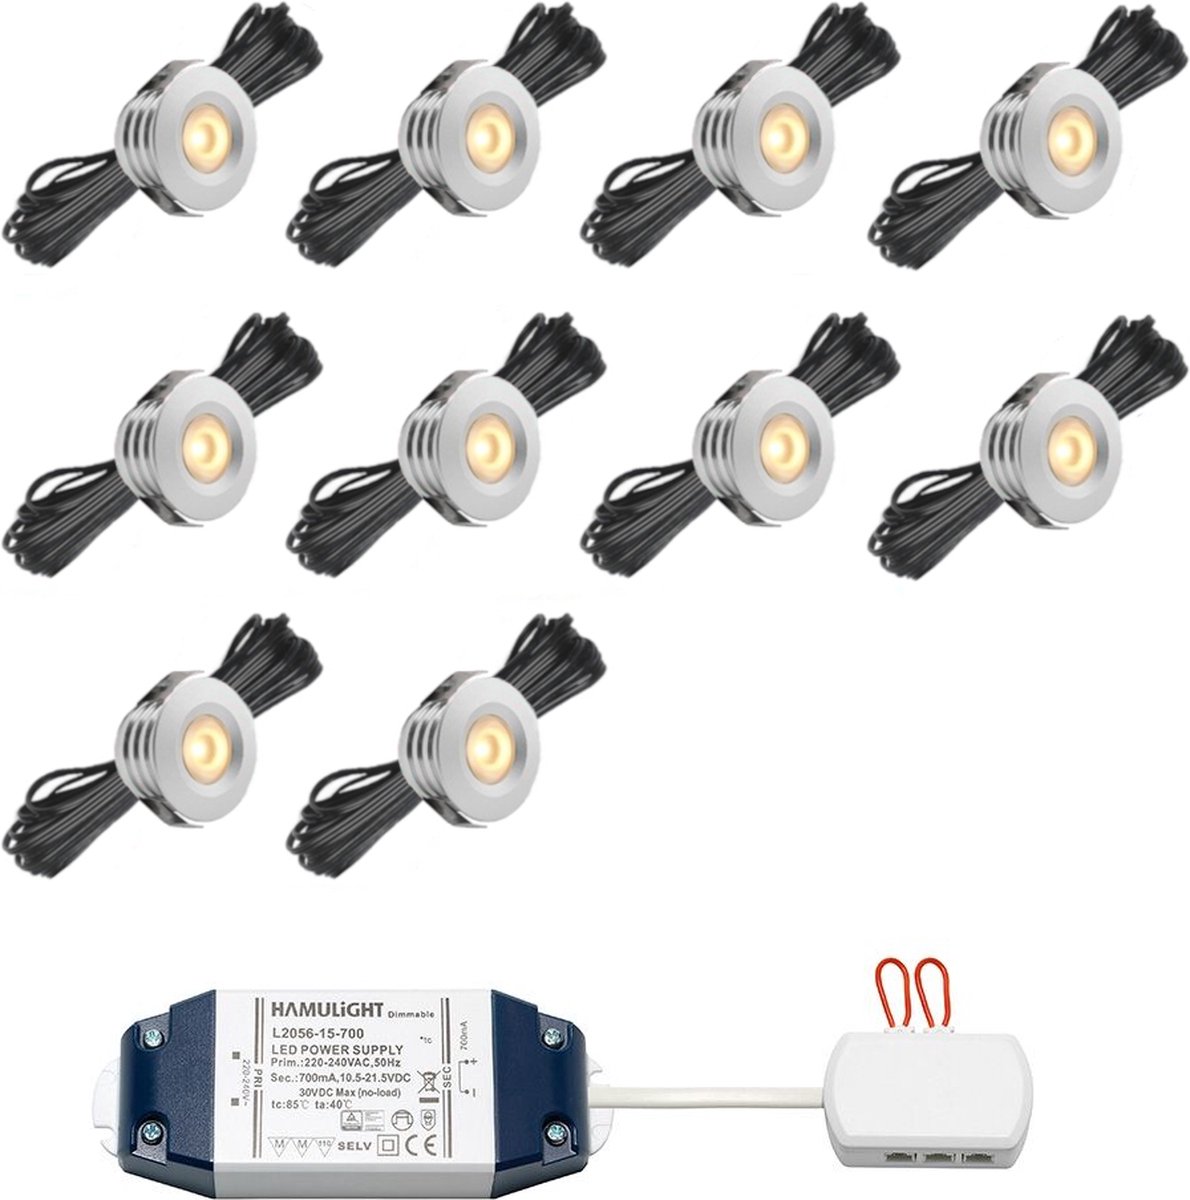 LED inbouwspot Pals bas inclusief trafo - inbouwspots / downlights / plafondspots / led spot / 3W / dimbaar / warm wit / rond / 230V / IP44 / - set van 10 stuks